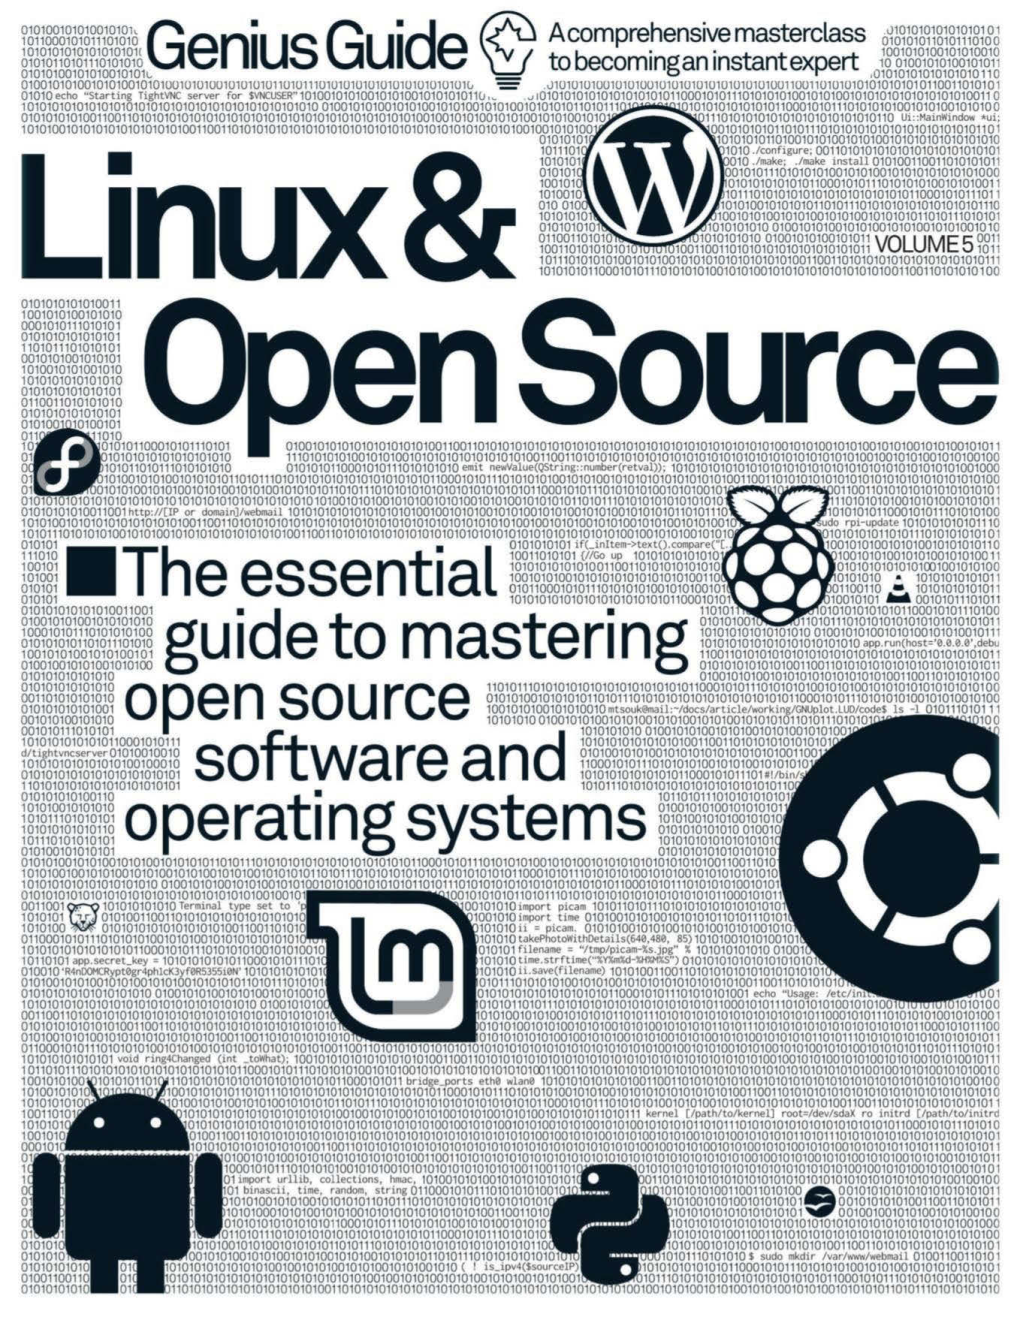 Linux & Open Source Genius Guide Vol 5